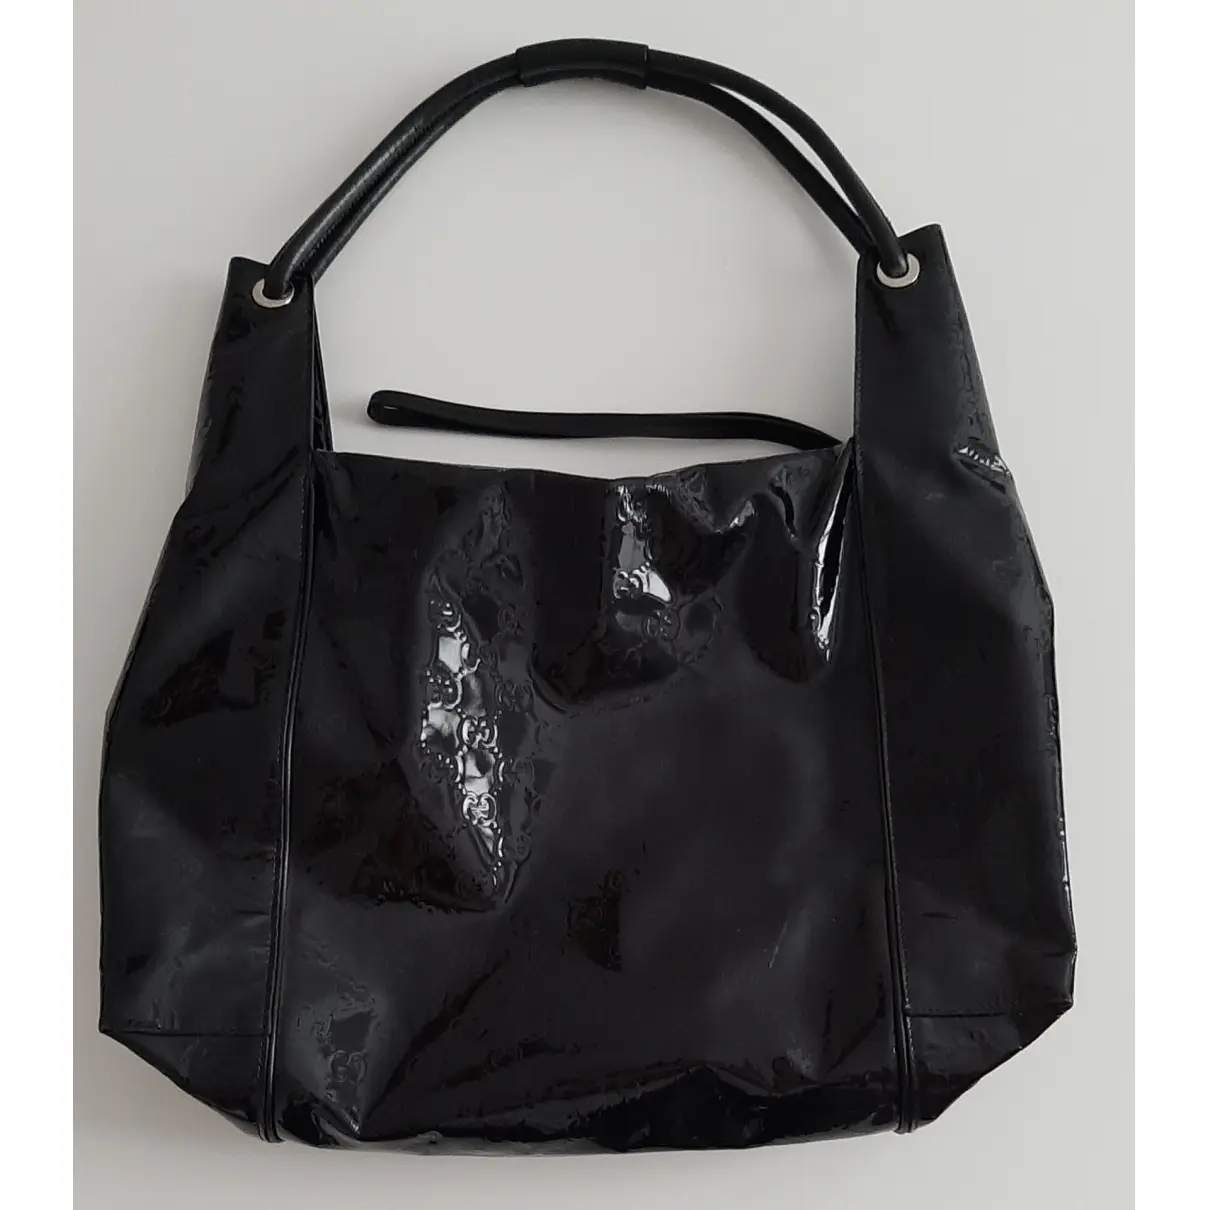 Gucci Hobo patent leather handbag for sale - Vintage